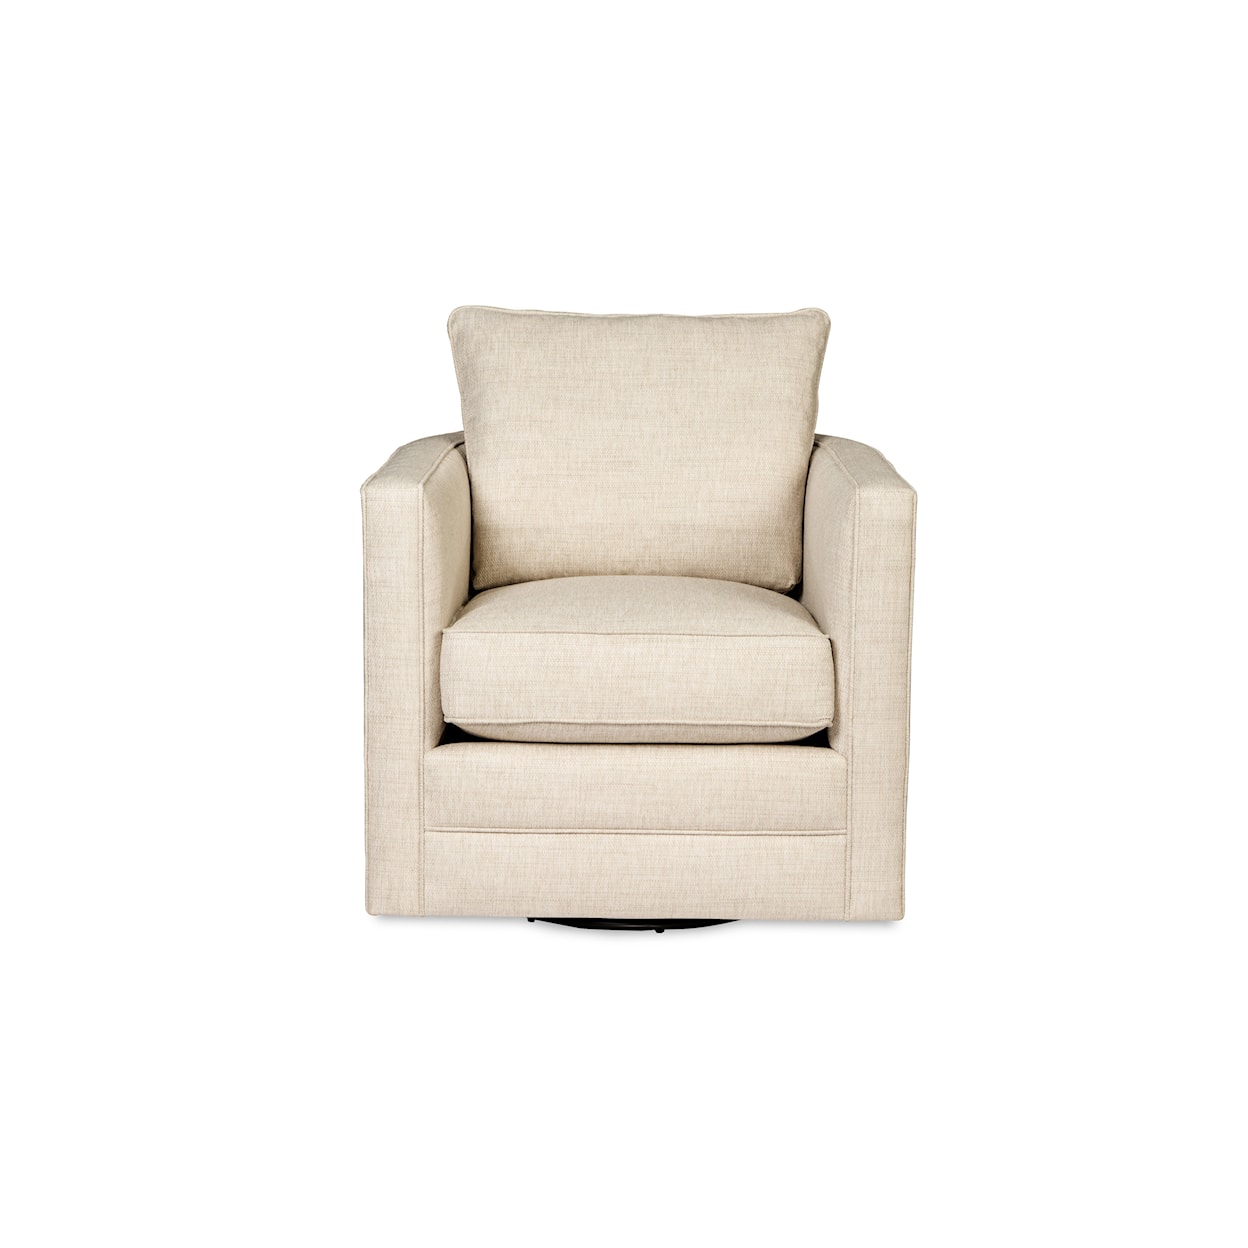 Hickory Craft 018410 Swivel Glider Chair